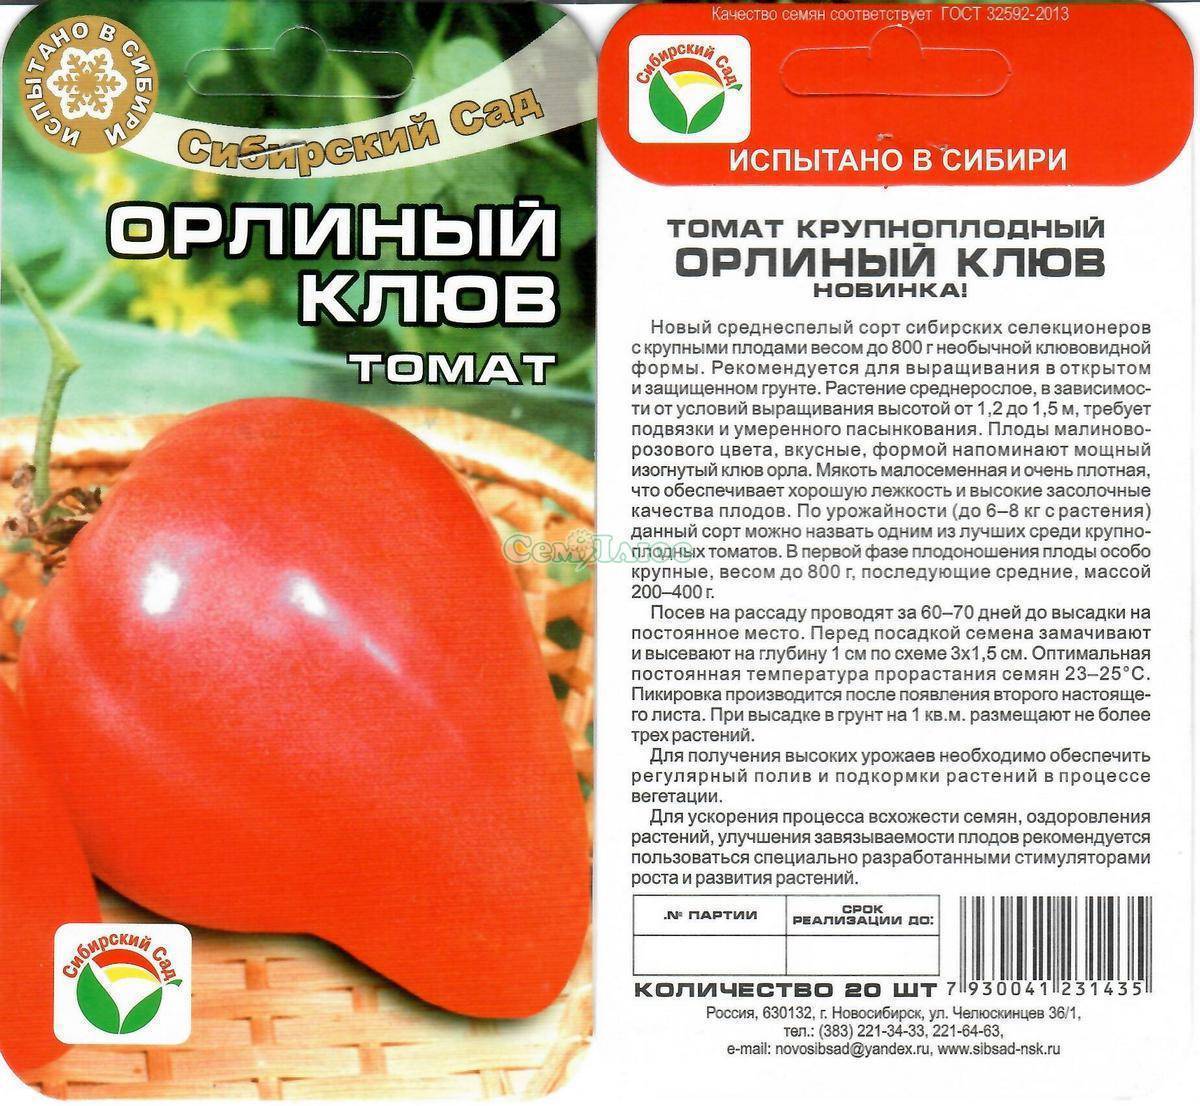 Характеристика томата крайний север и культивирование сорта